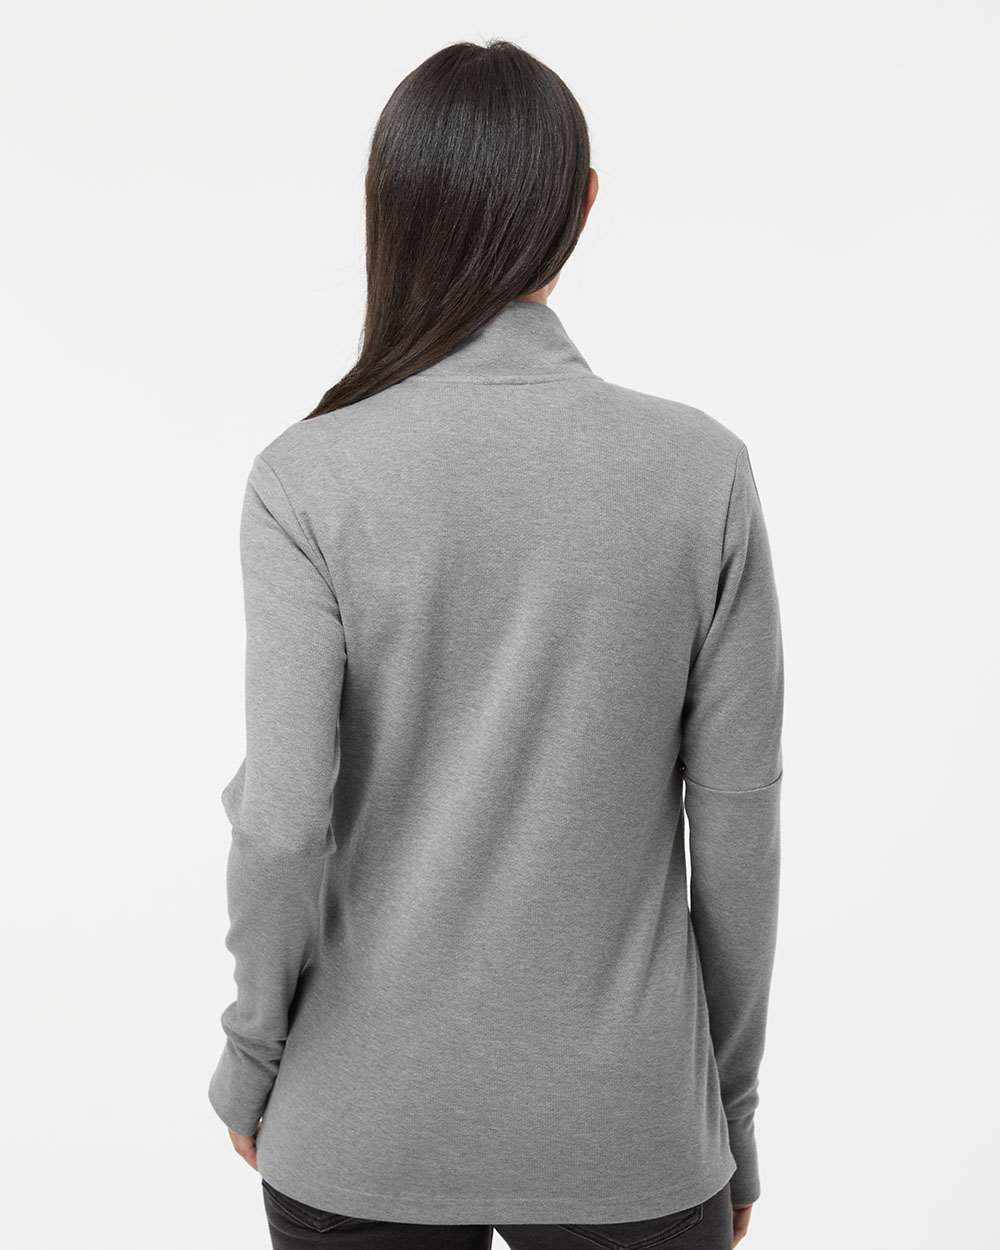 Adidas A555 Women's 3-Stripes Quarter-Zip Sweater #colormdl_Grey Three Melange